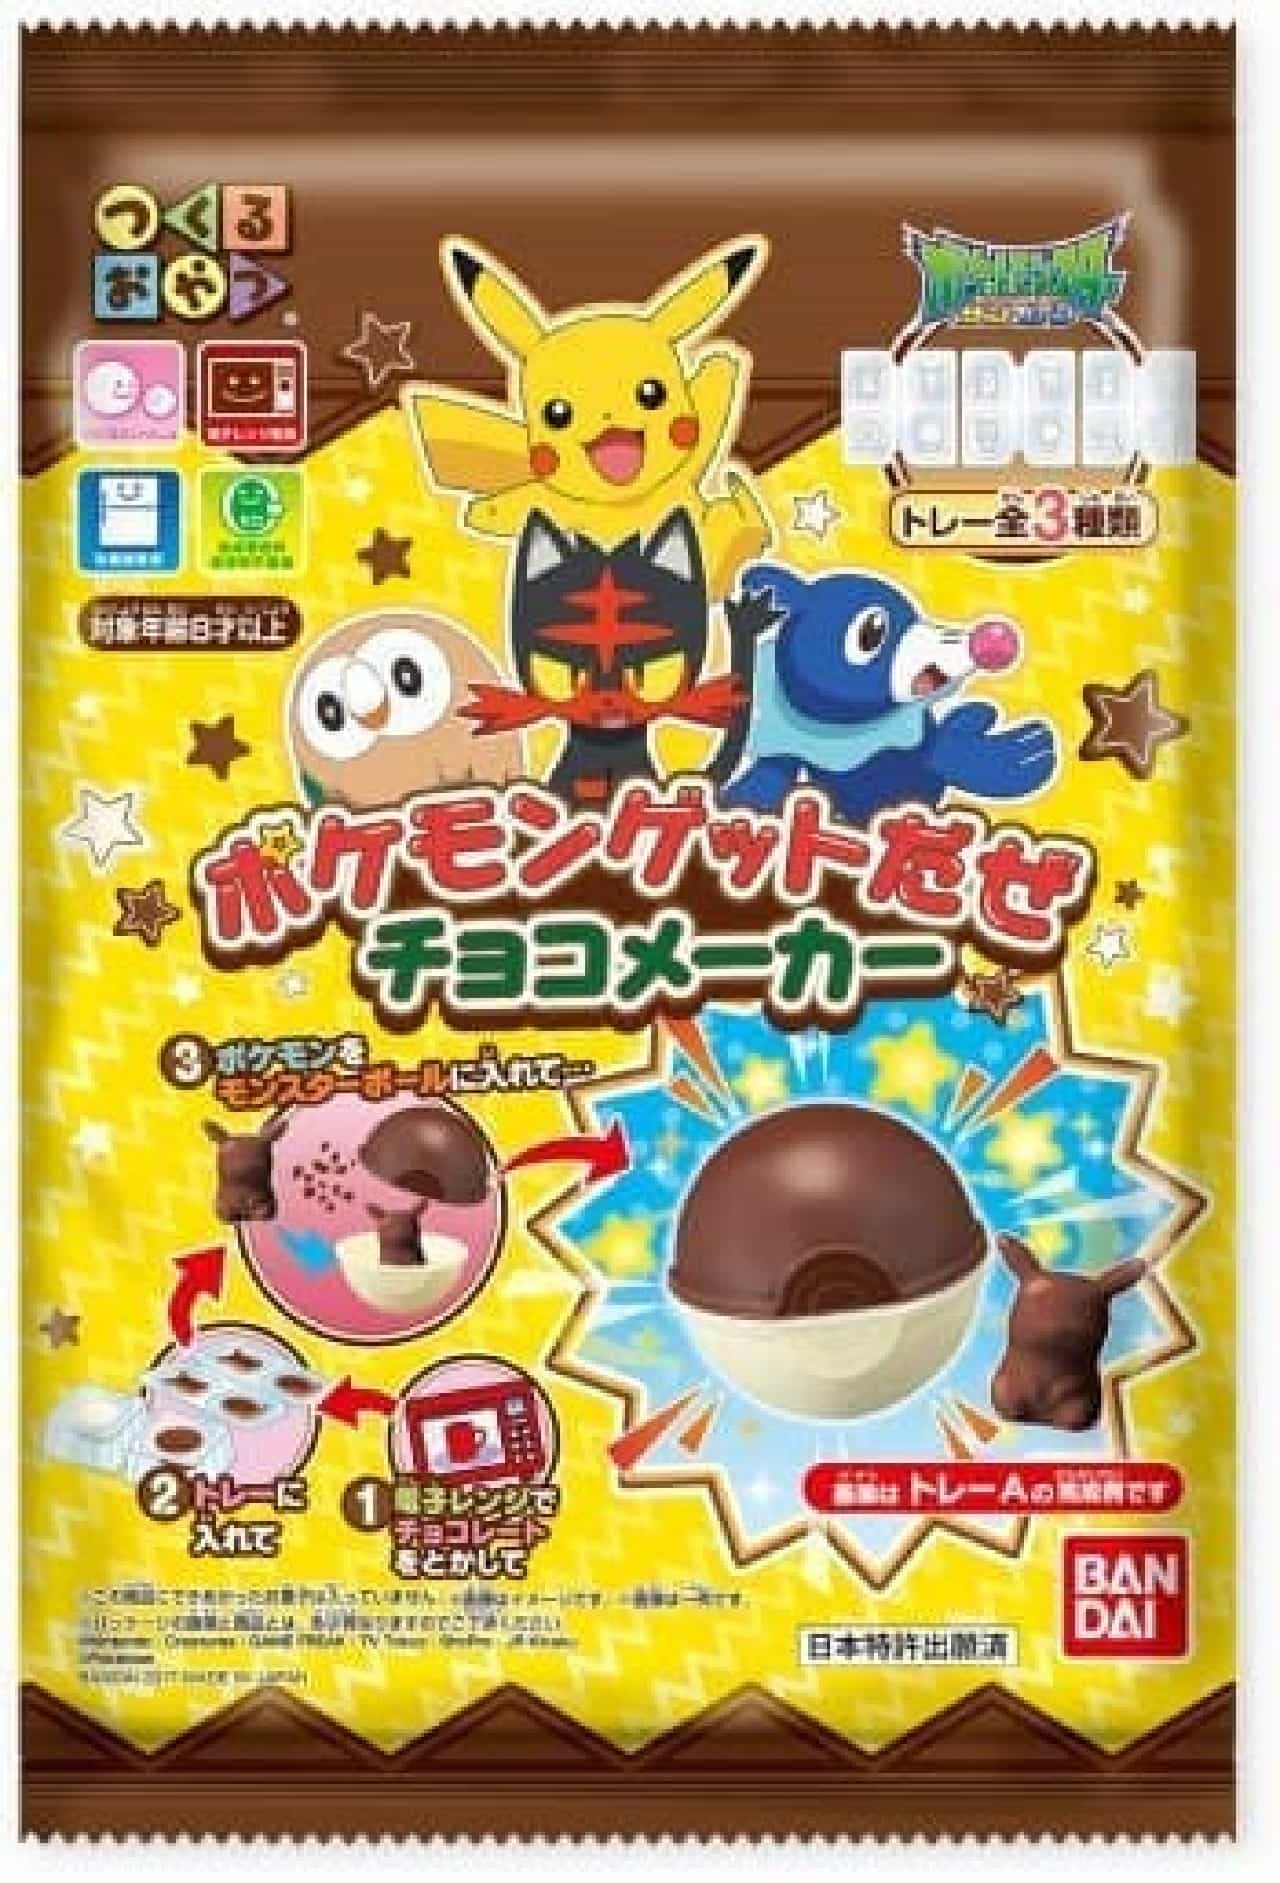 BANDAI "Make a snack Pokemon get! Chocolate maker"